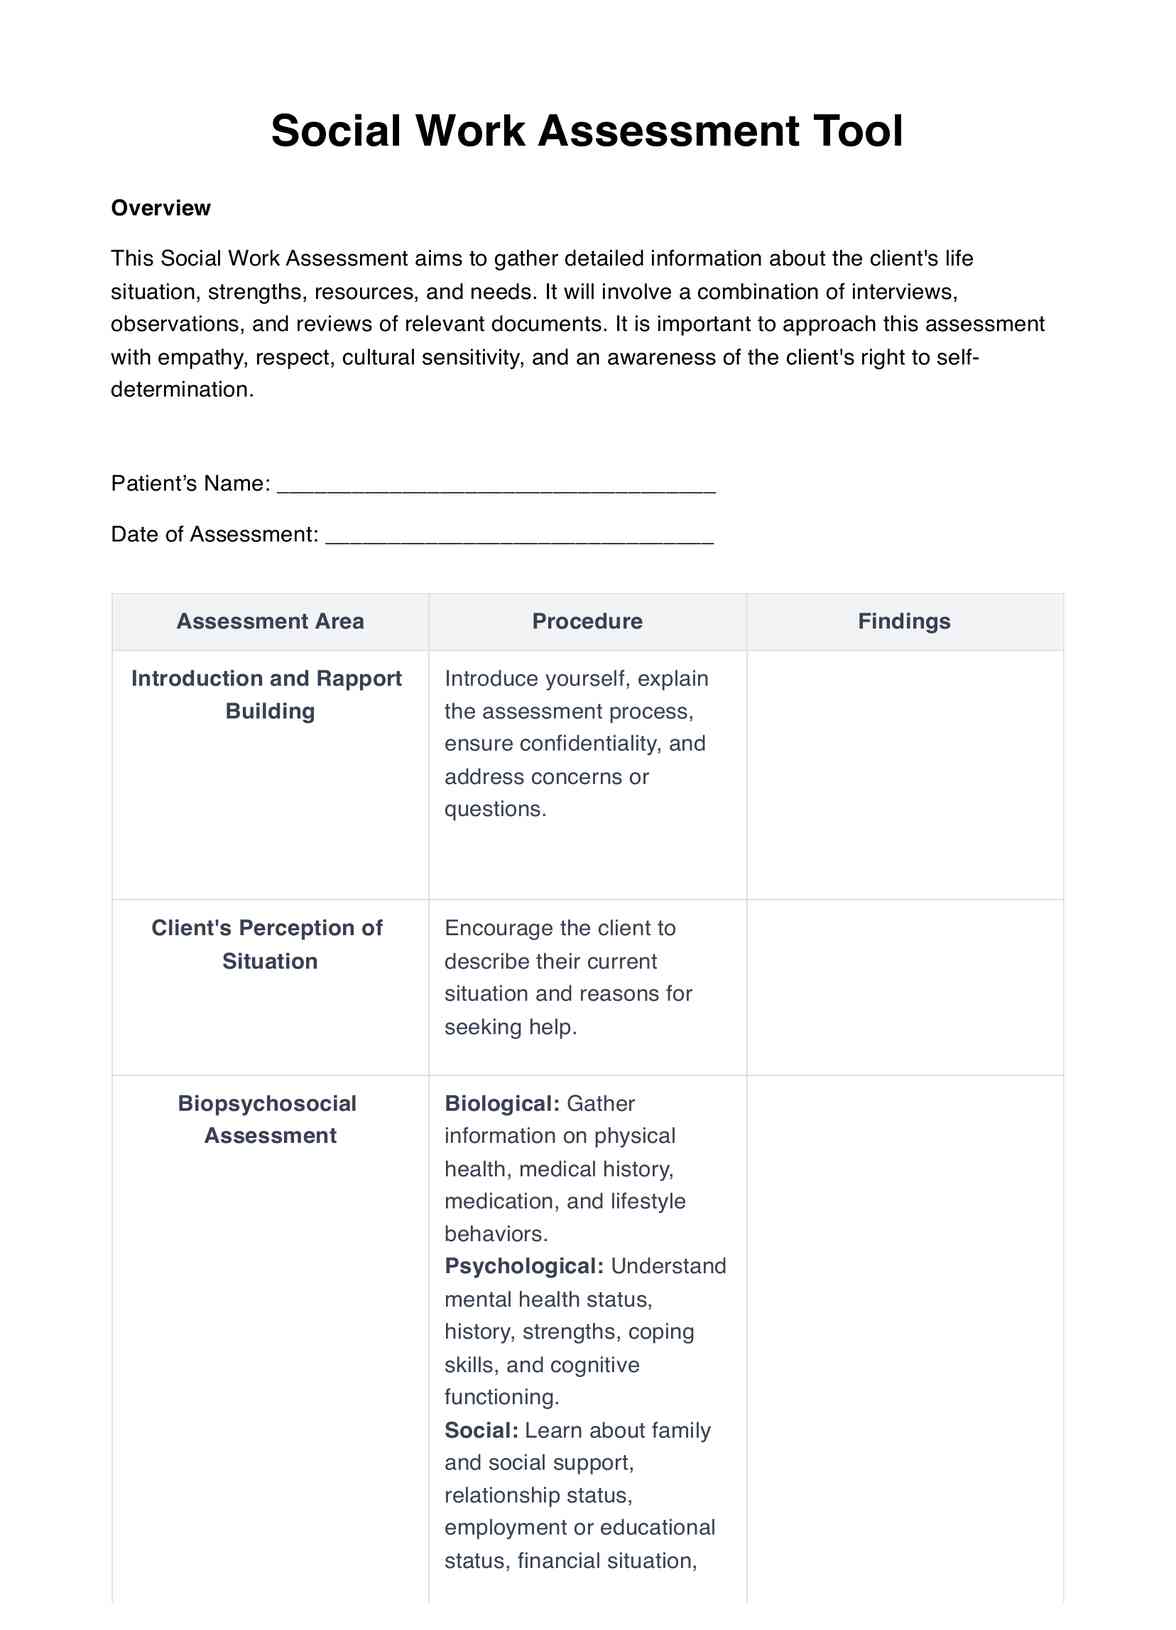 Social Work Assessment Tools PDF Example